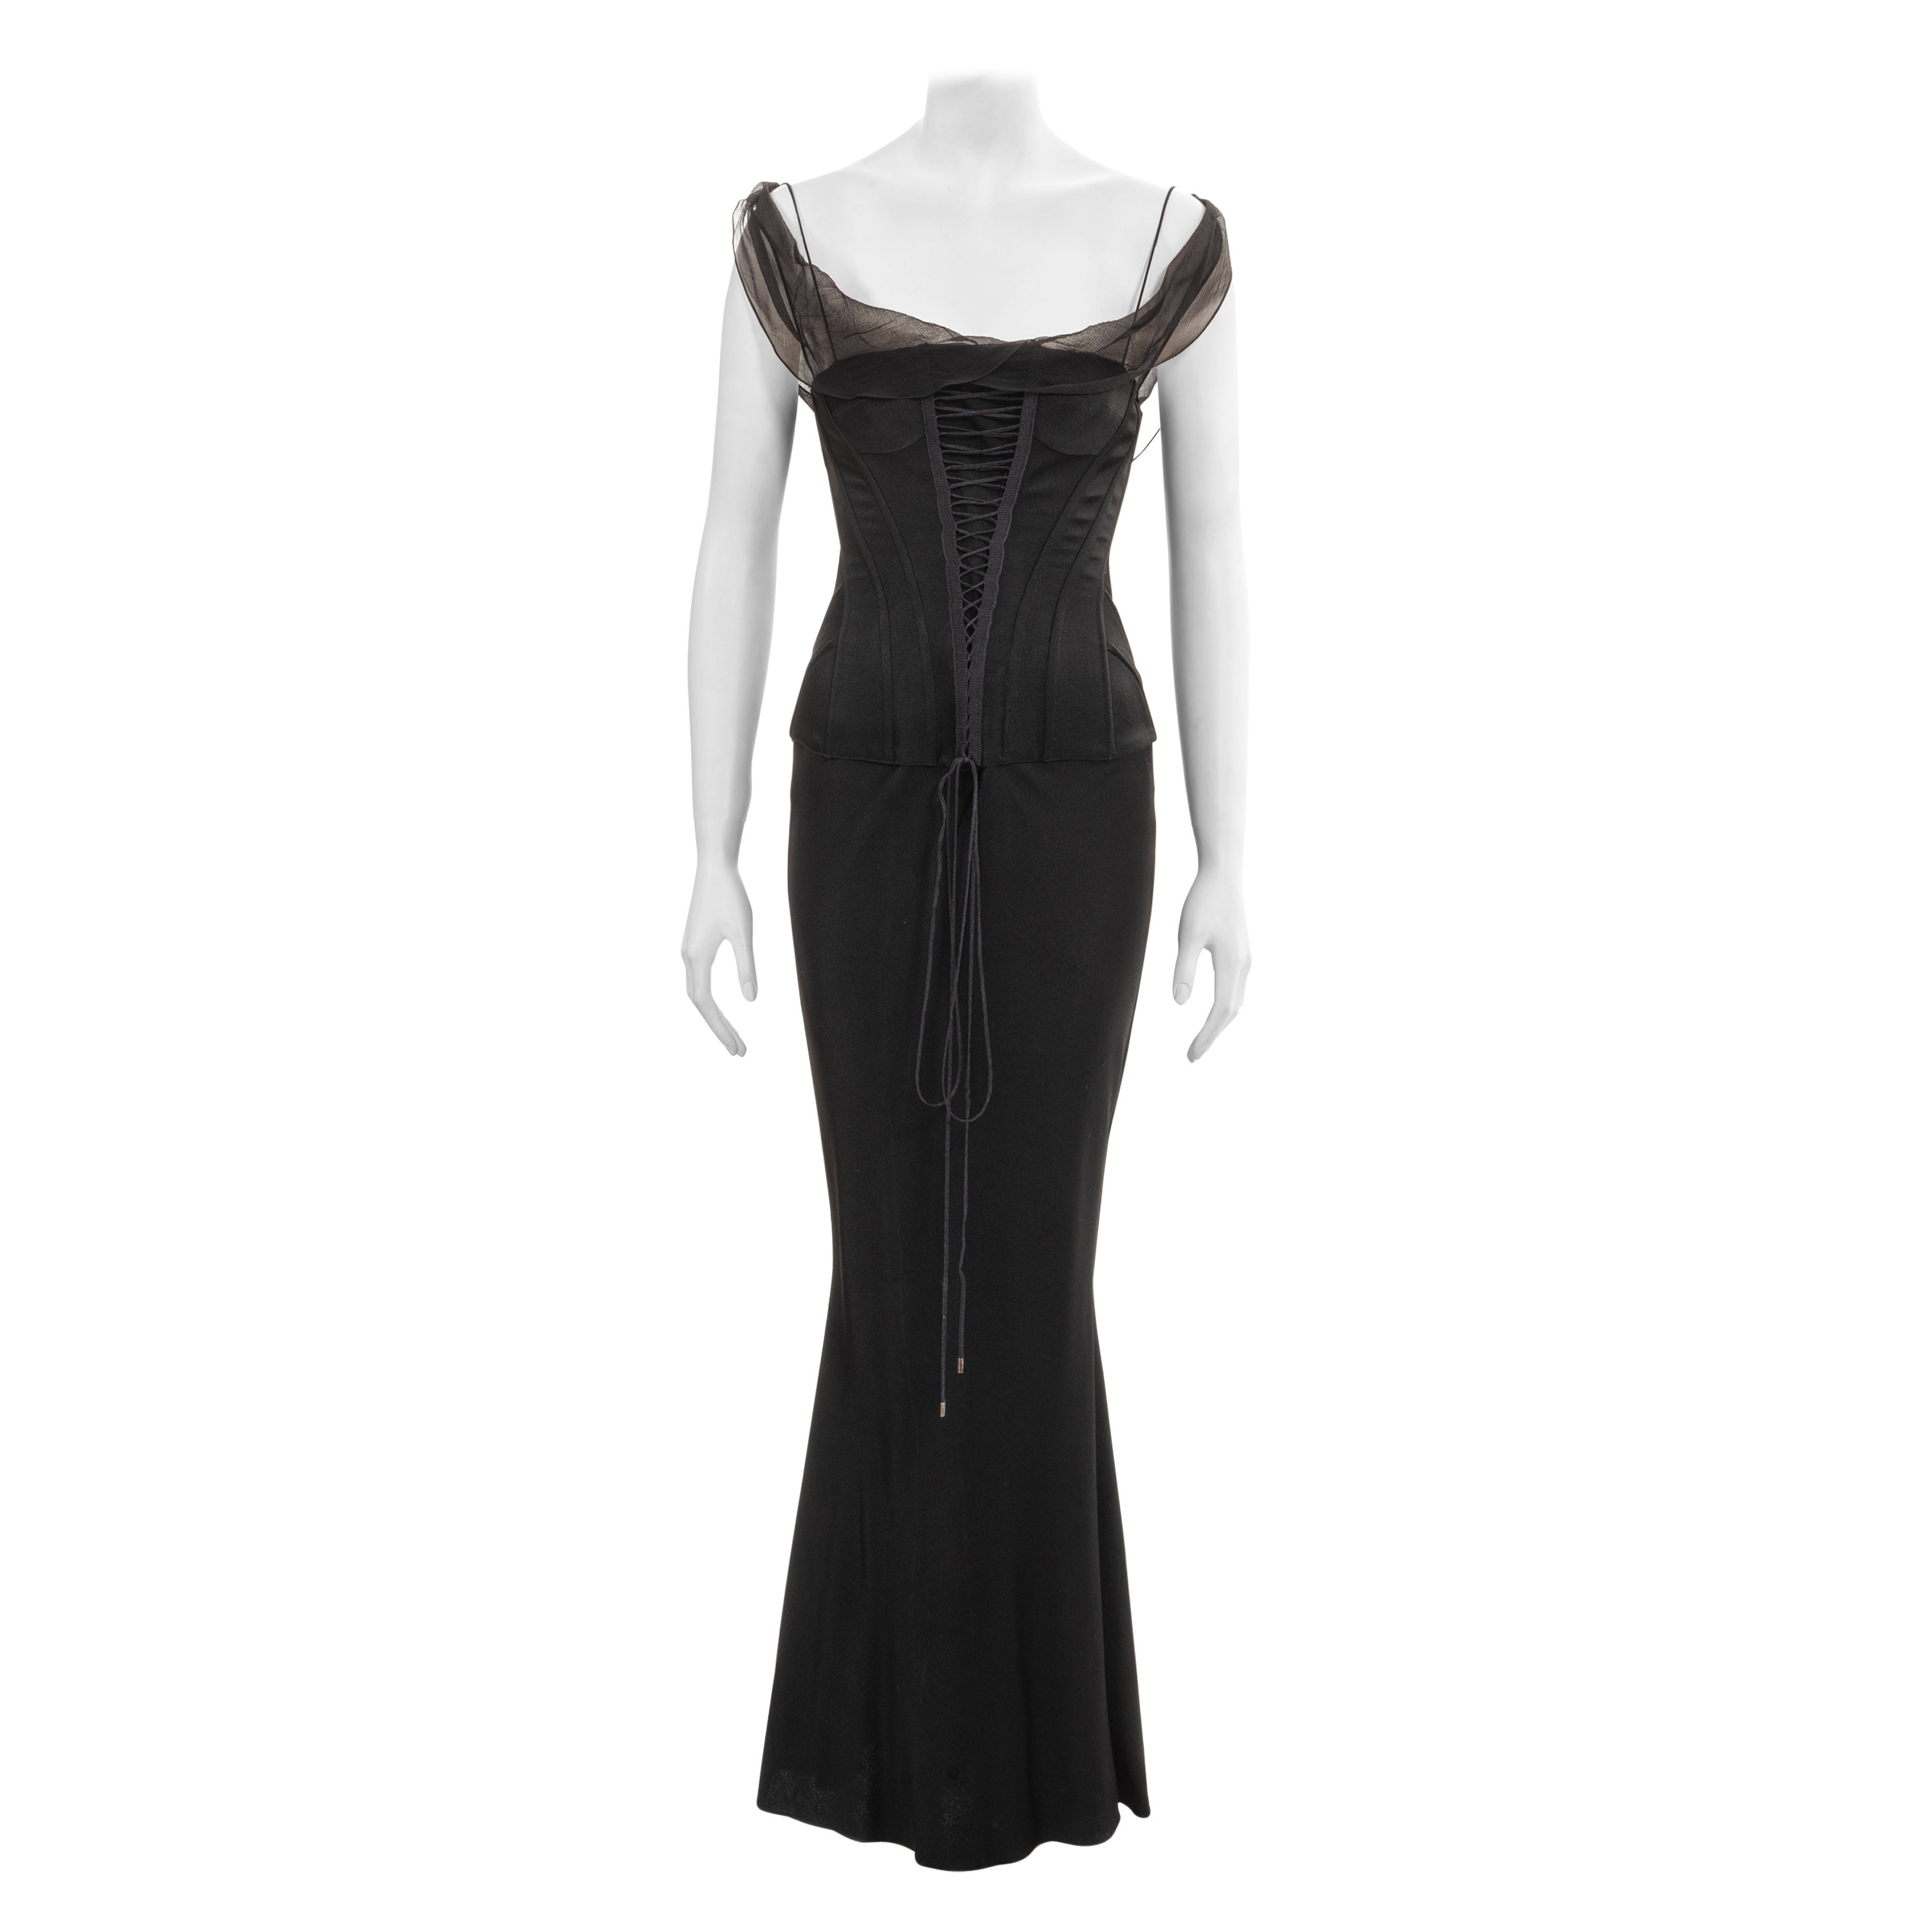 John Galliano black satin evening dress with integrated corset, ss 2003